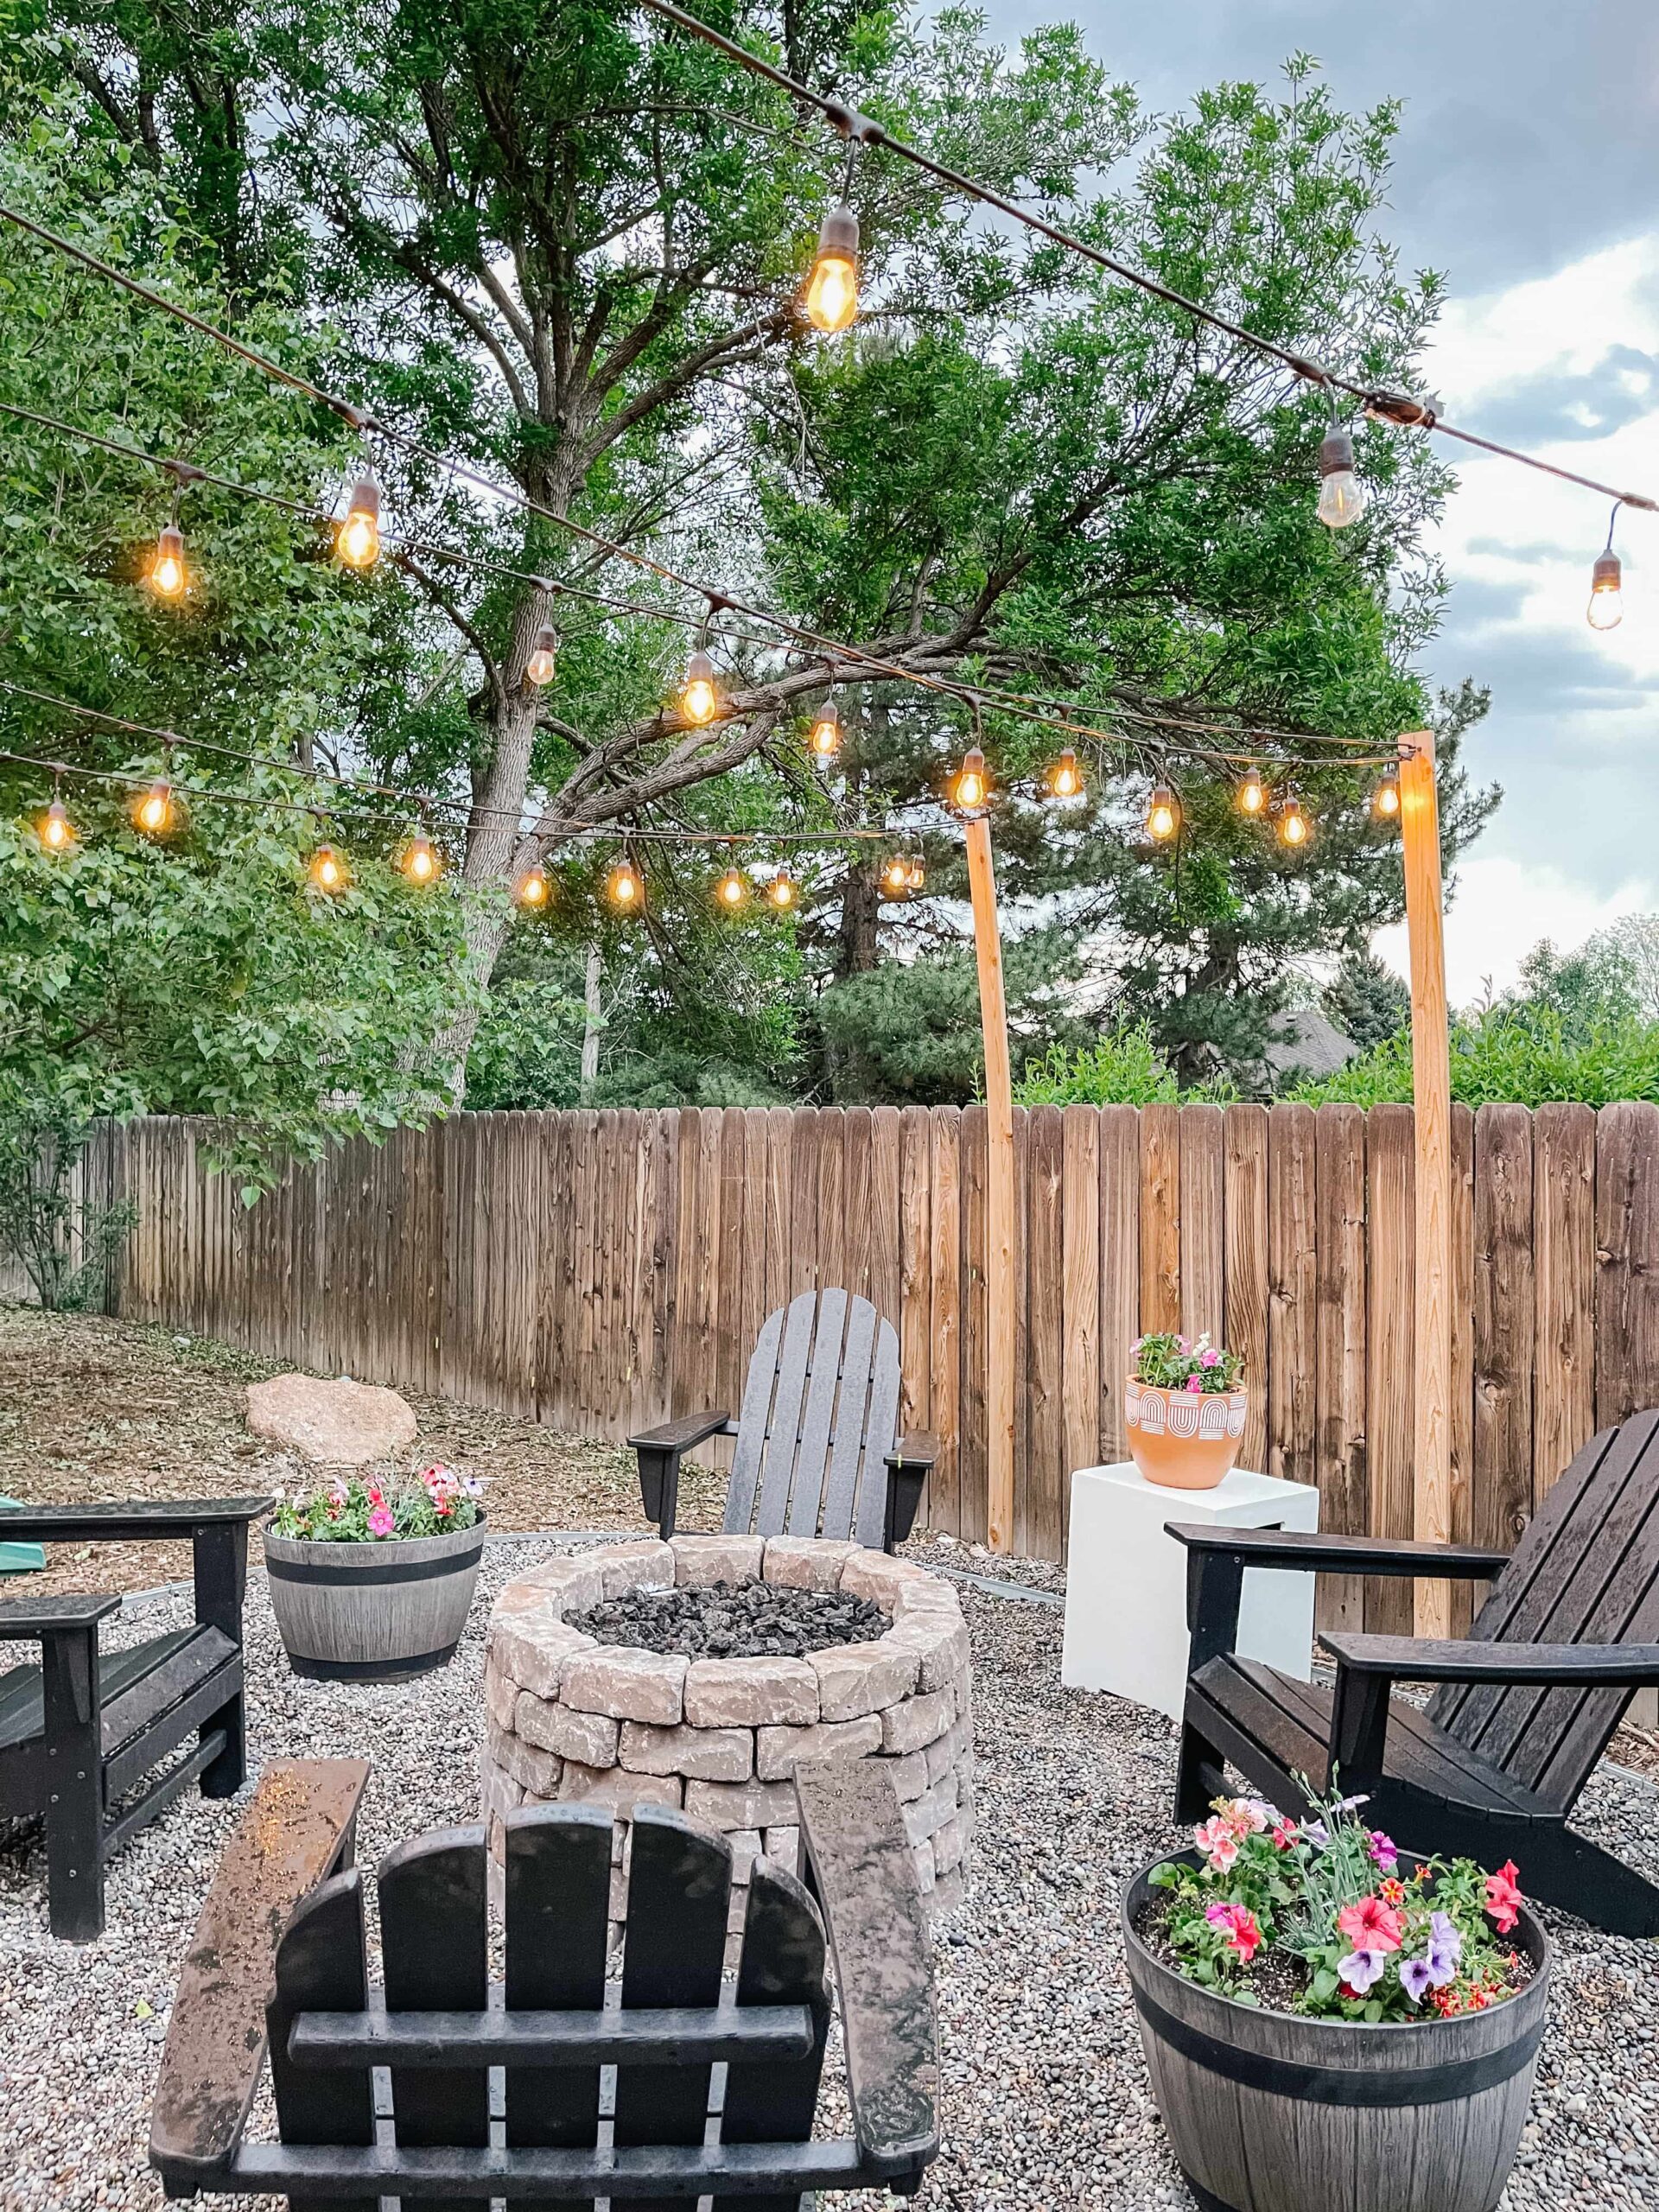 Outdoor wall decor ideas – 15 ways to brighten up garden walls and